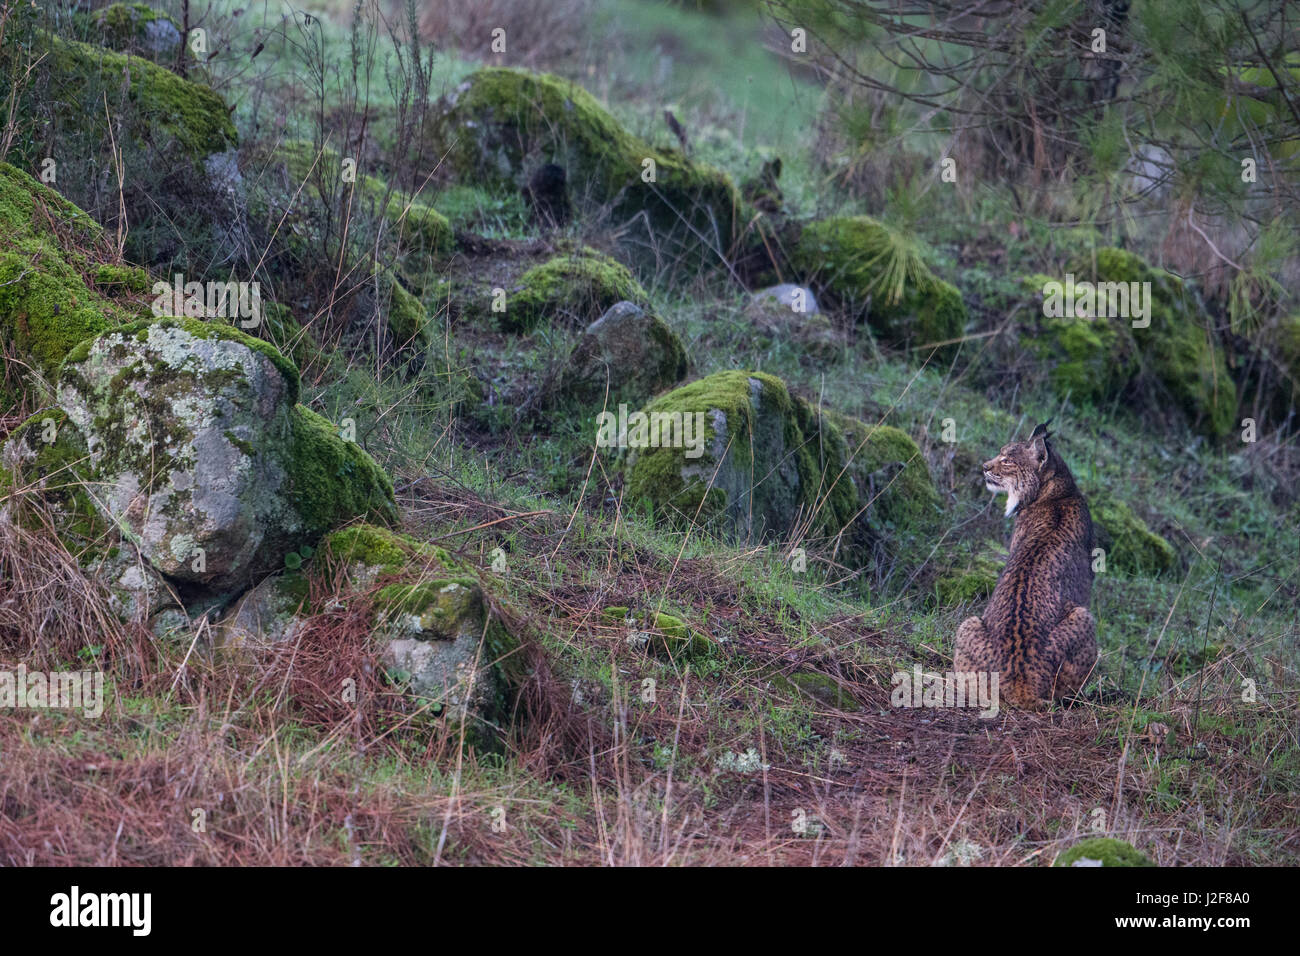 Lince iberica (Lynx pardinus) nel suo habitat. Foto Stock